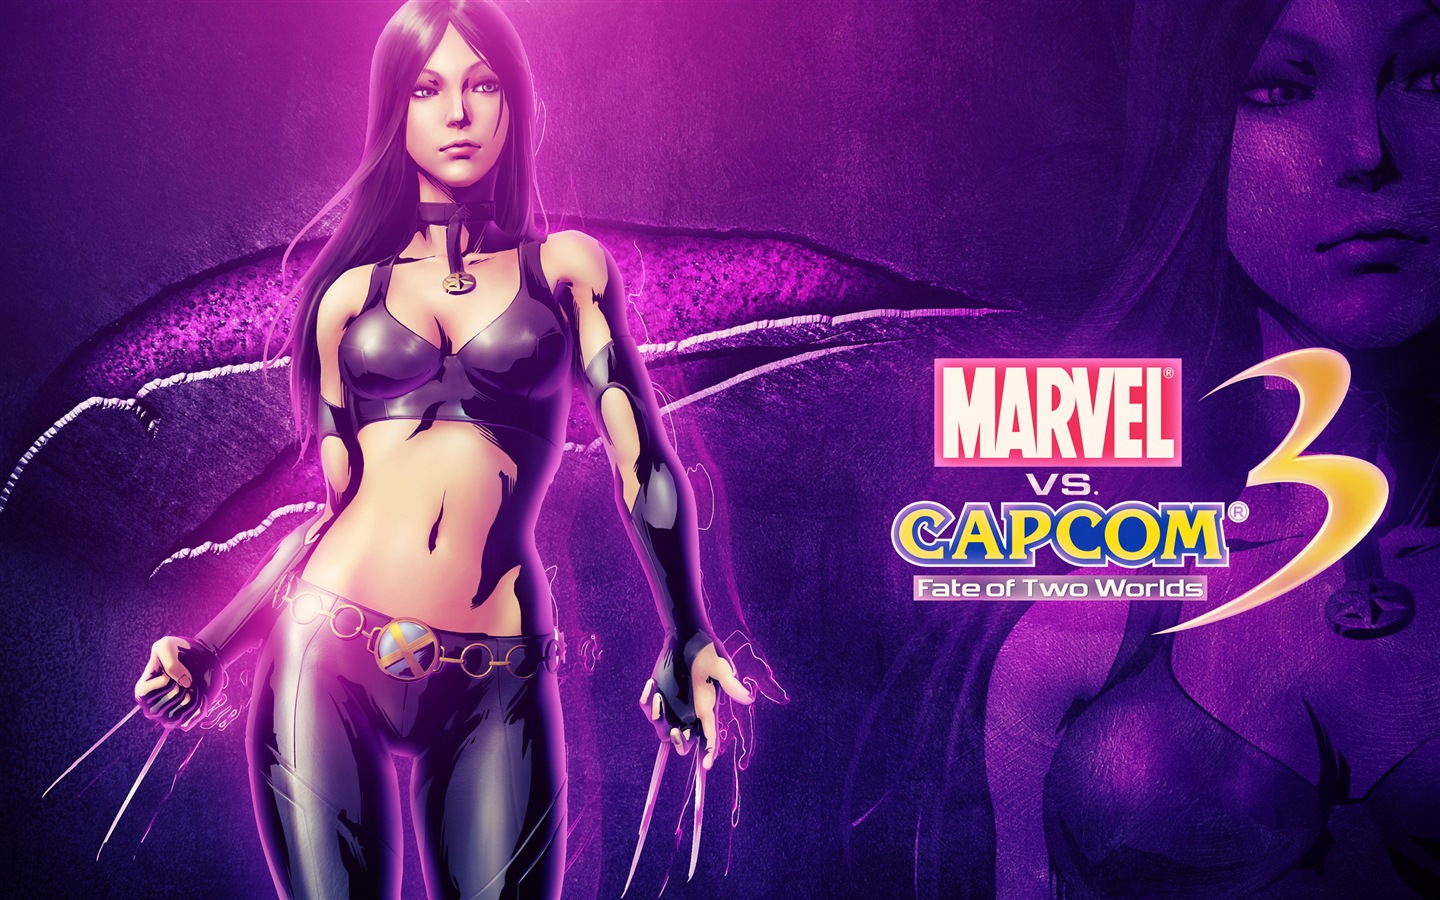 Marvel VS. Capcom 3: Fate of Two Worlds 漫画英雄VS.卡普空3 高清游戏壁纸10 - 1440x900